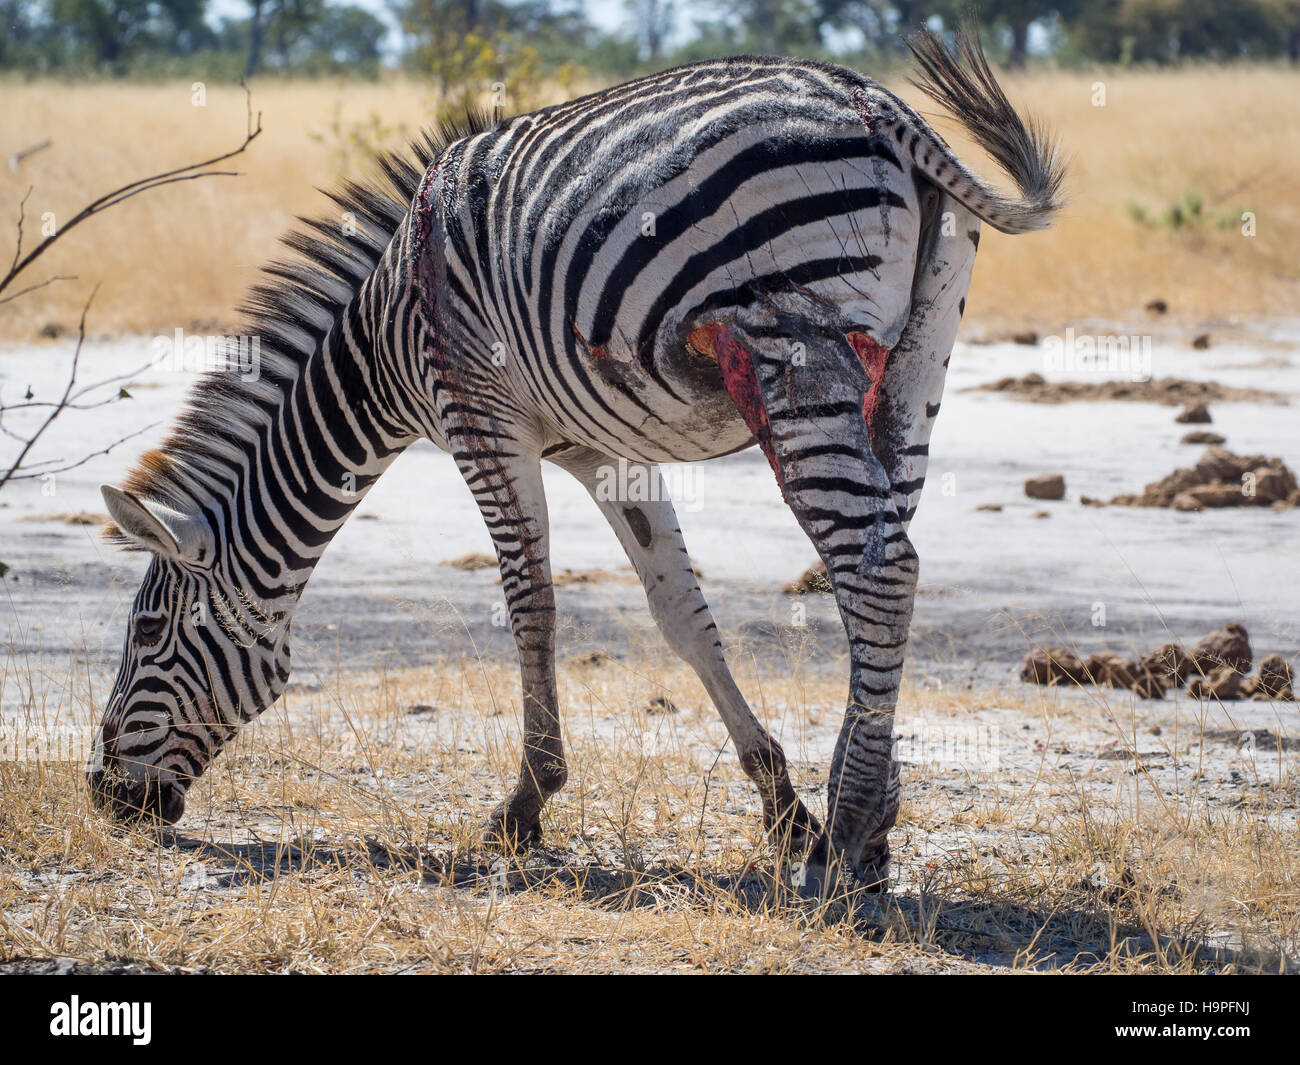 Zebra legs walking stock photo. Image of animal, feet - 11233774